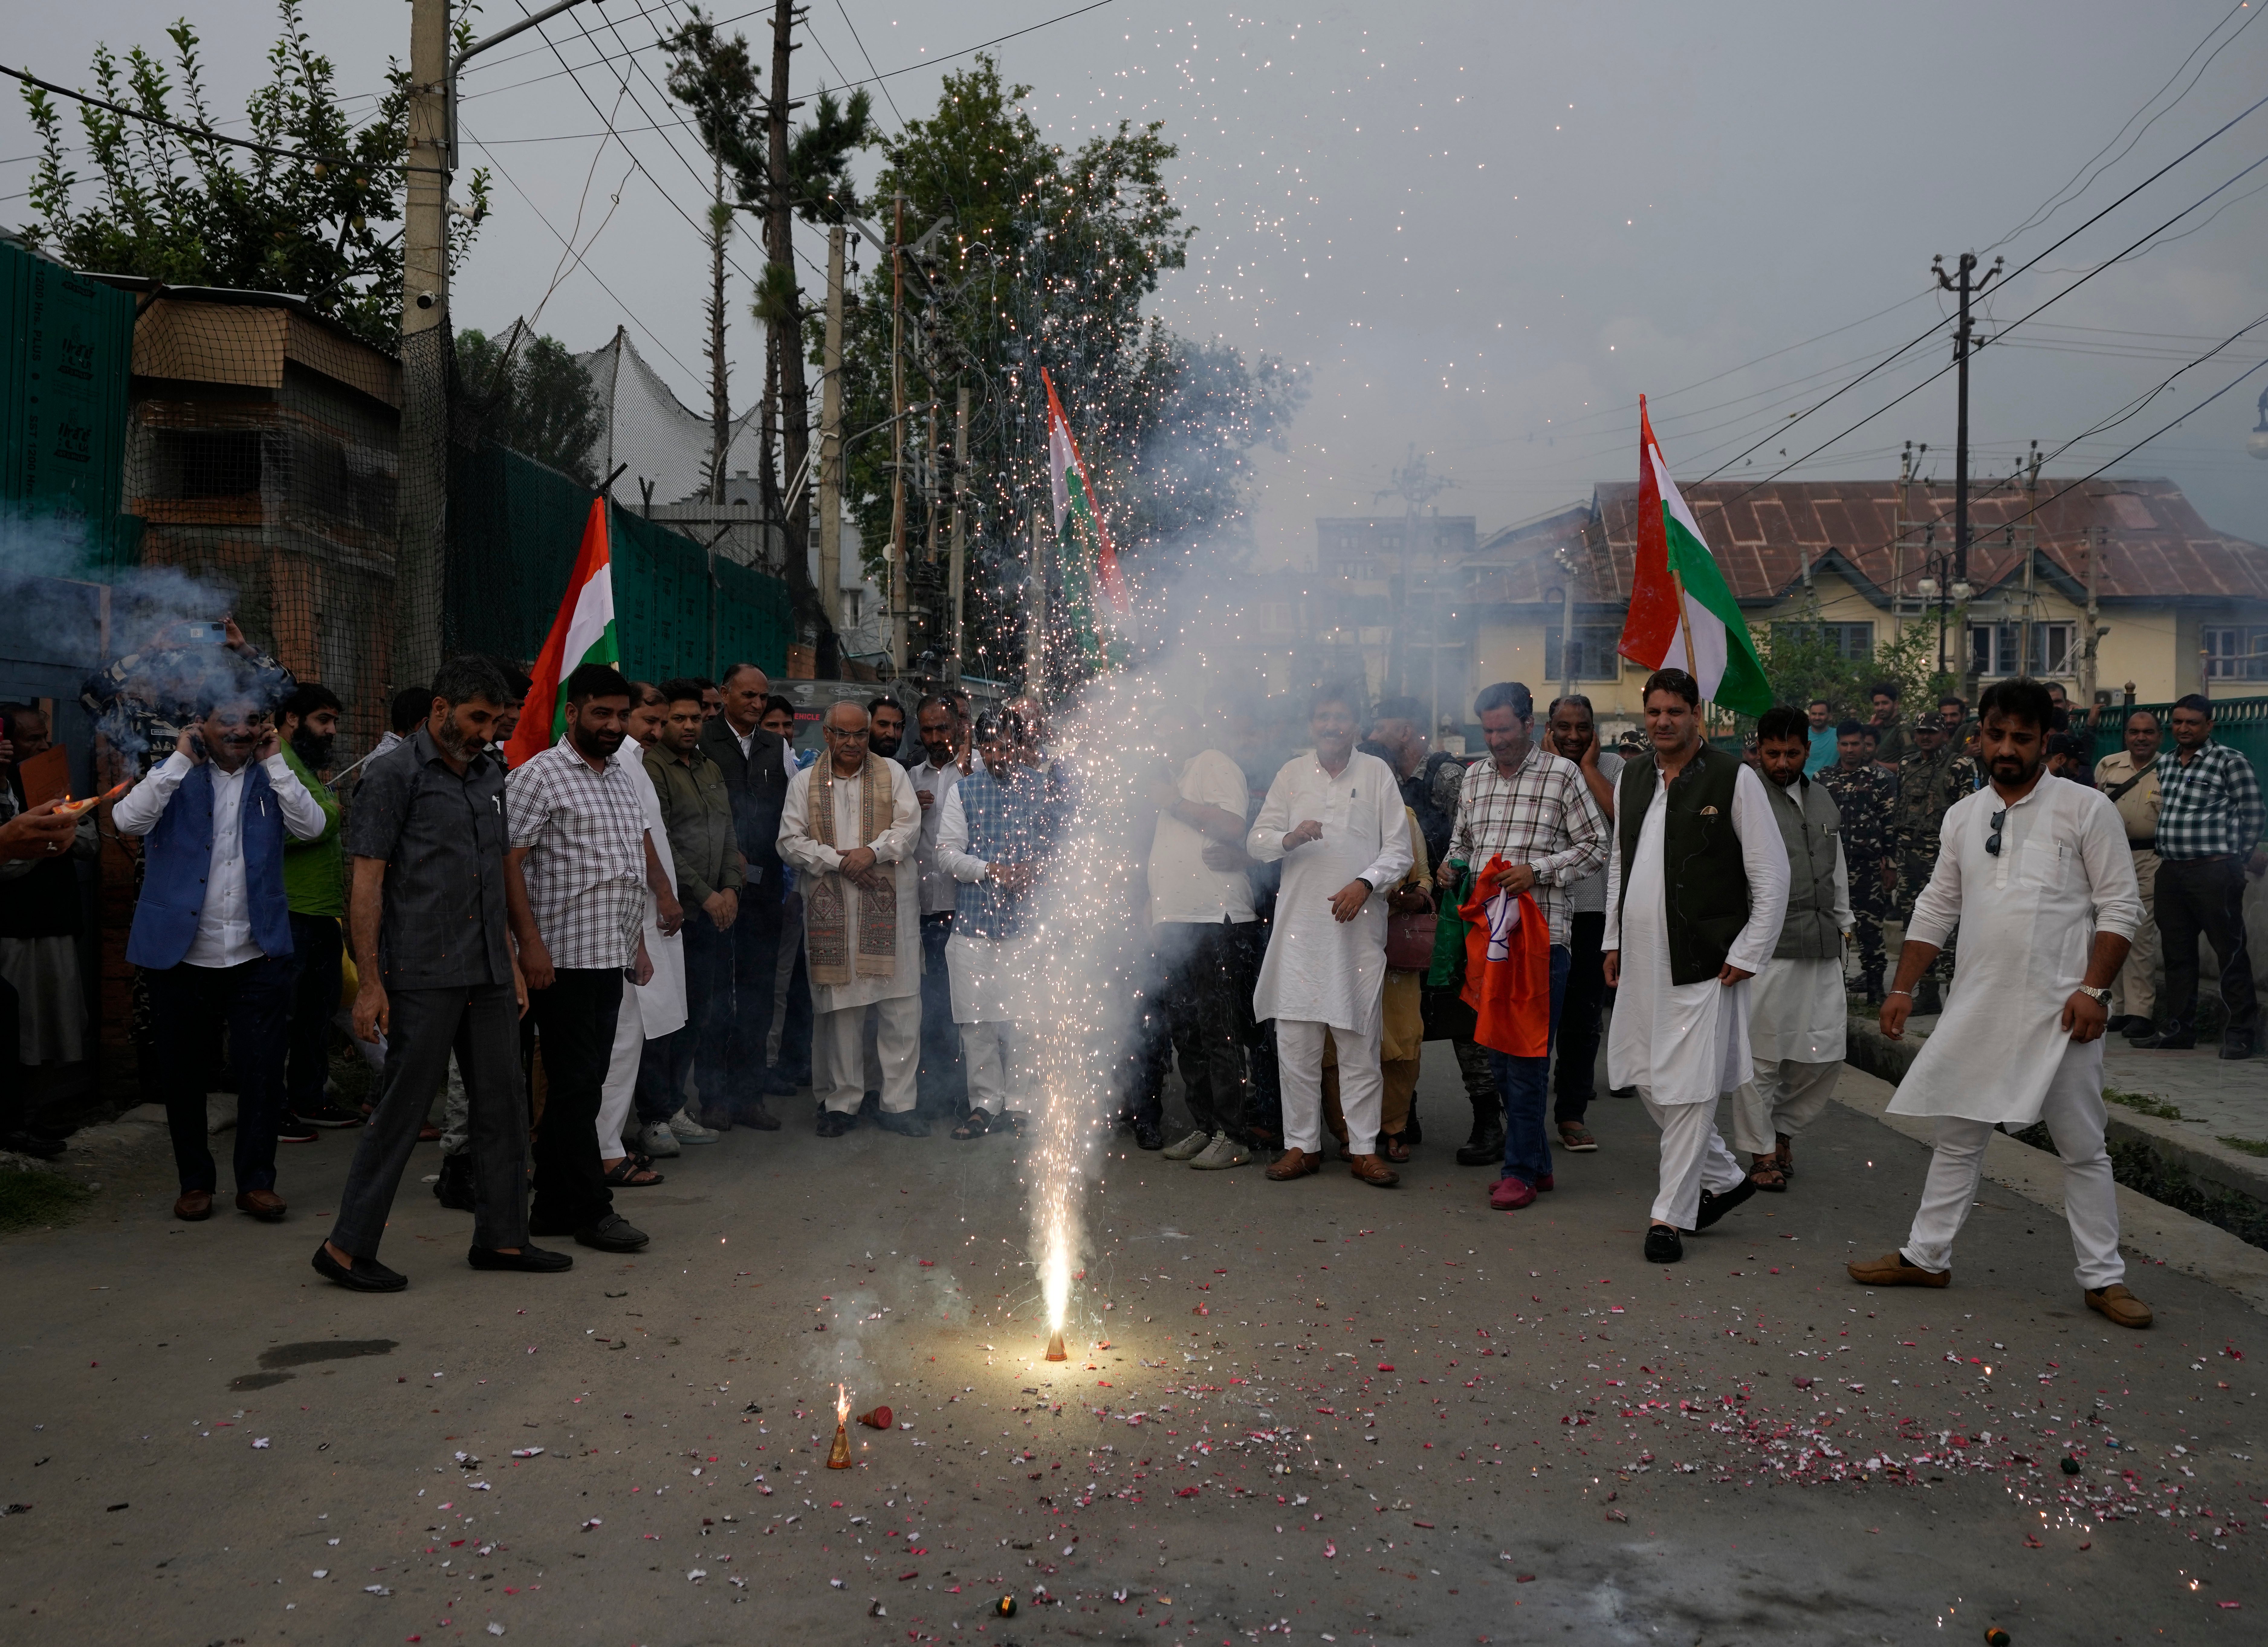 Bharatiya Janata Party (BJP) workers light firecrackers in Srinagar, Indian controlled Kashmir